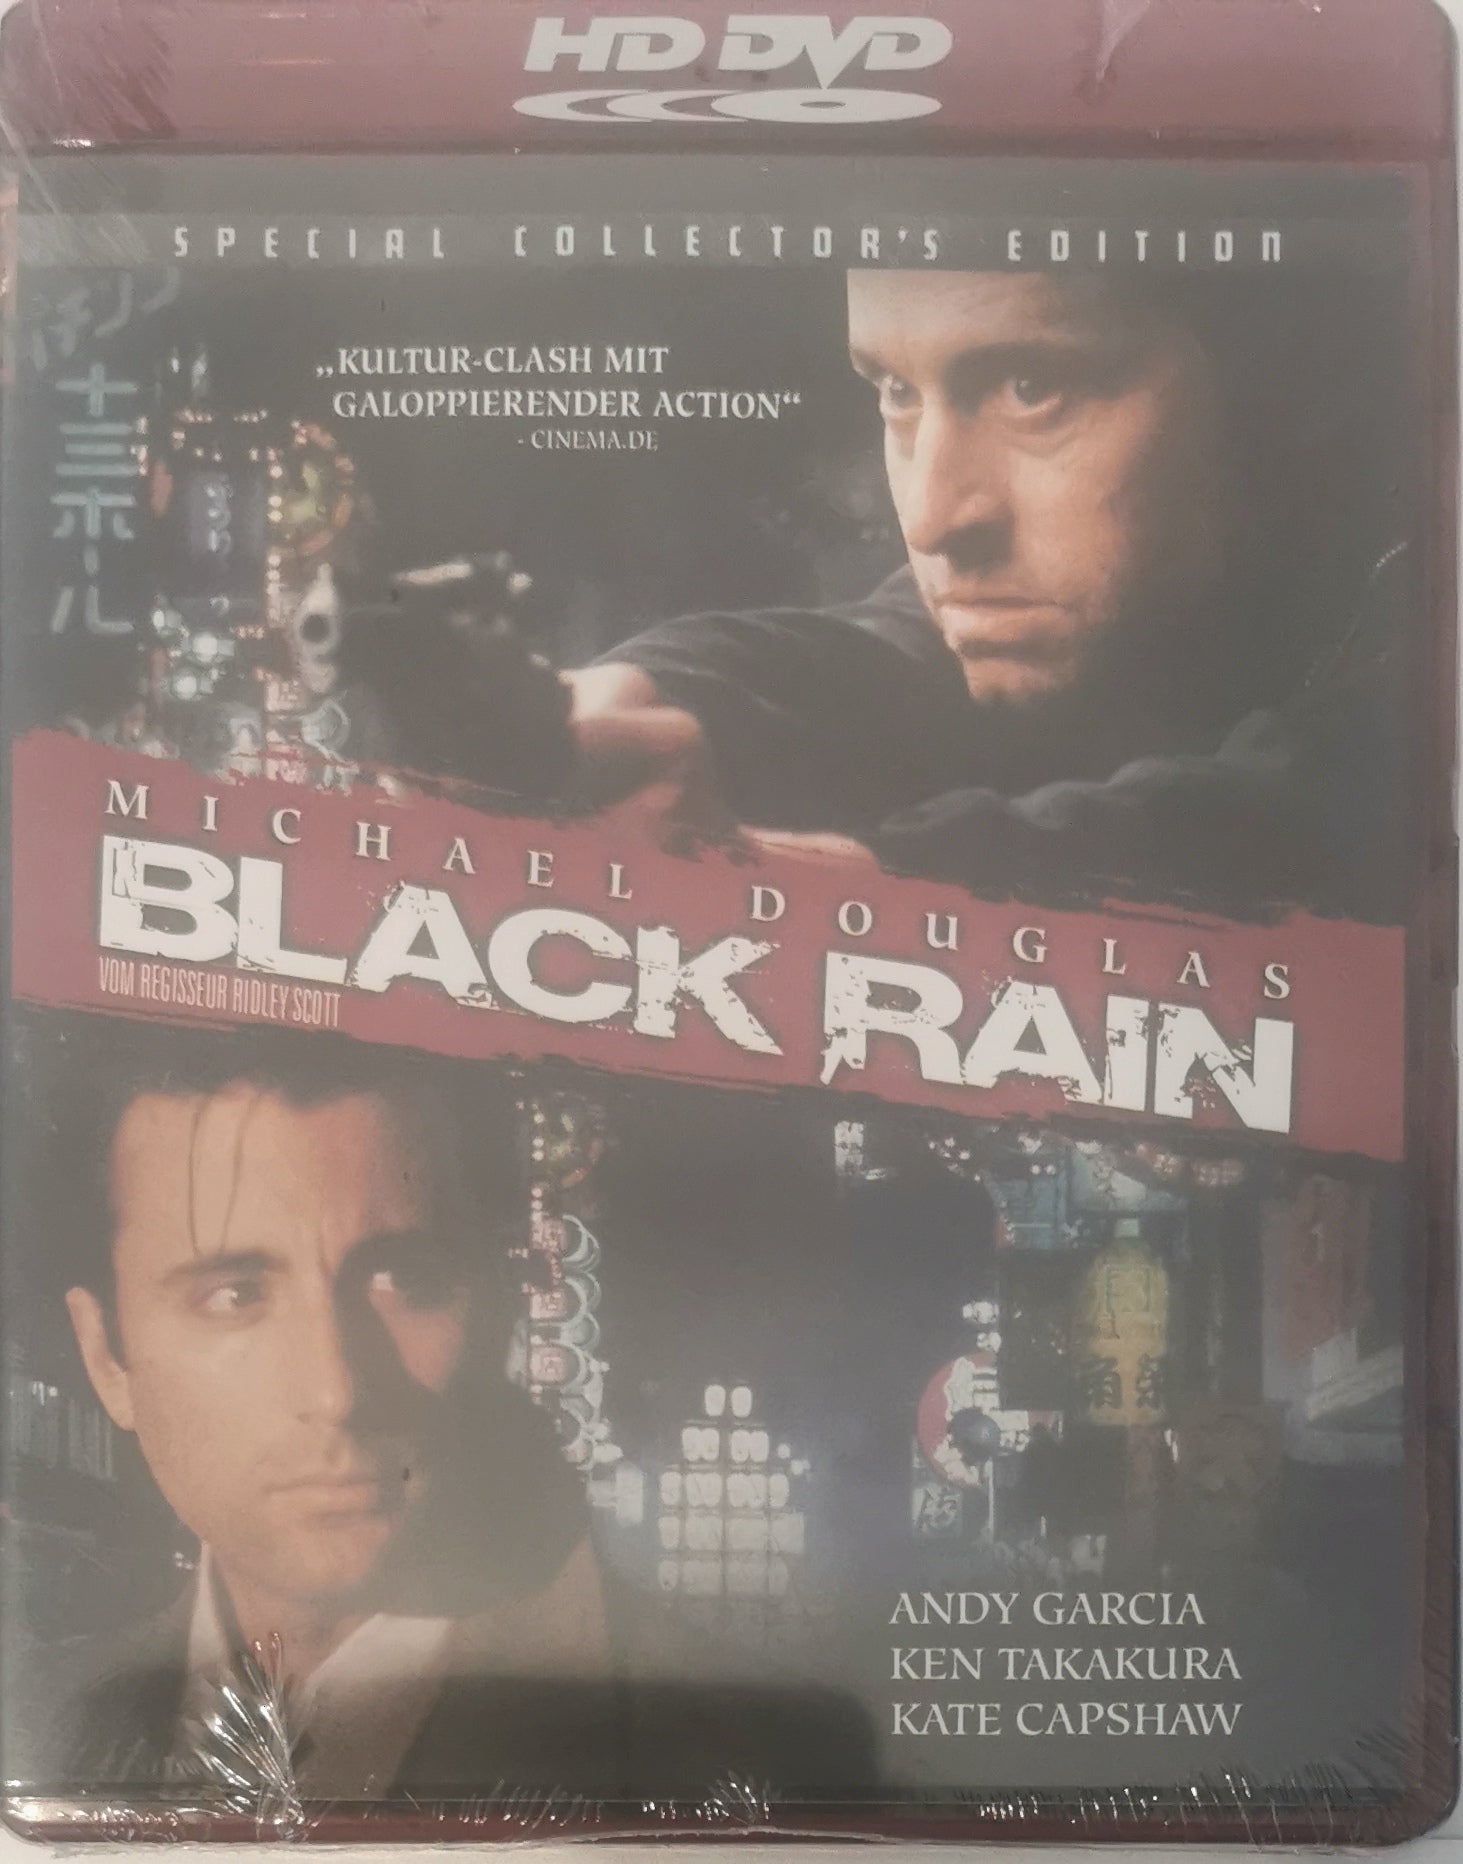 Black Rain HD DVD Special Collectors Edition Special Edition (HD-DVD) [Neu]